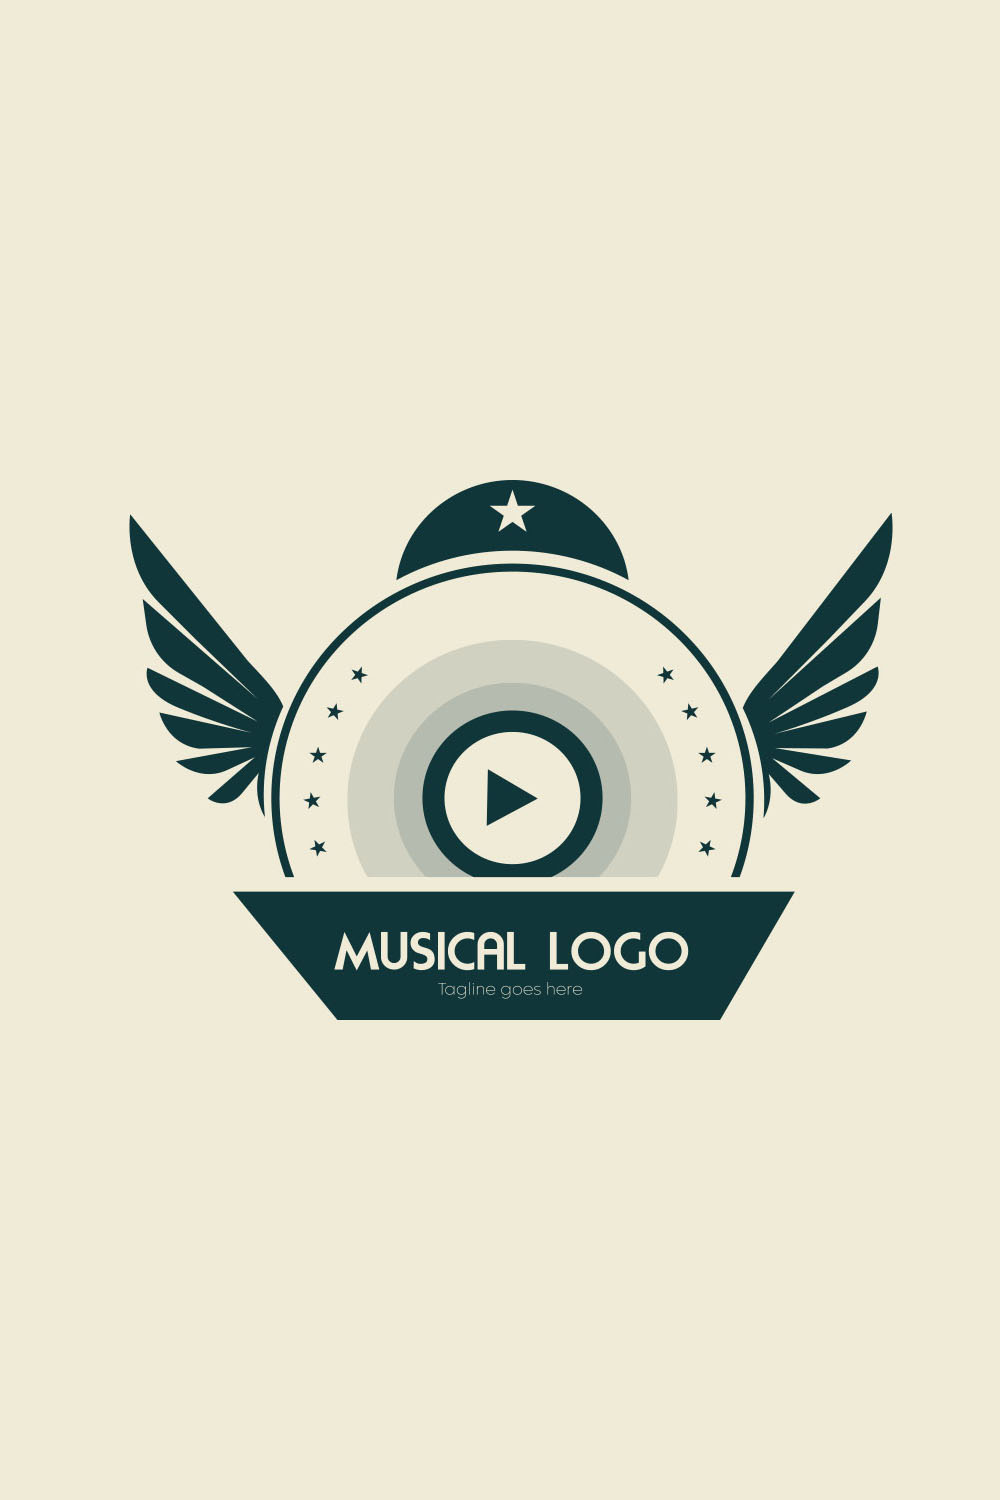 Creative Vintage Musical Logo Design Pinterest Collage image.